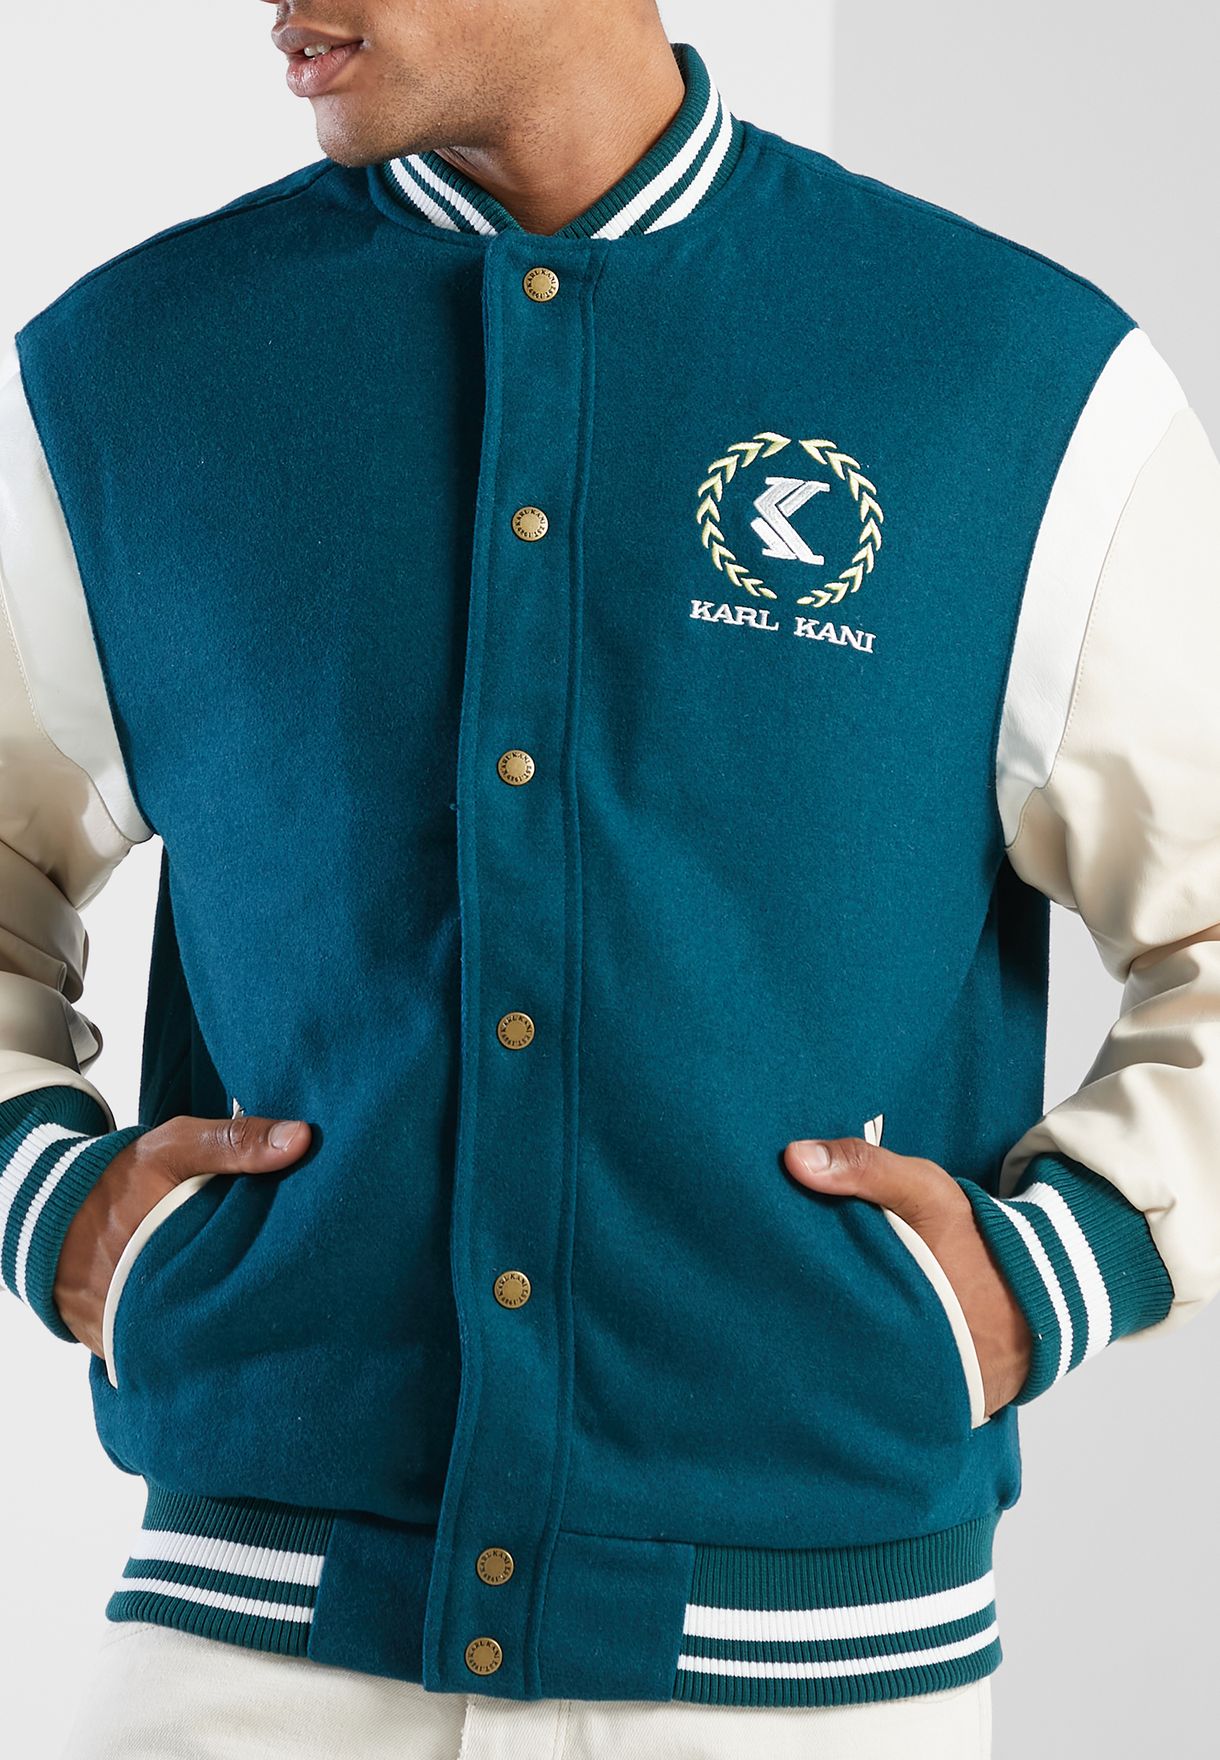 Retro Emblem College Jacket